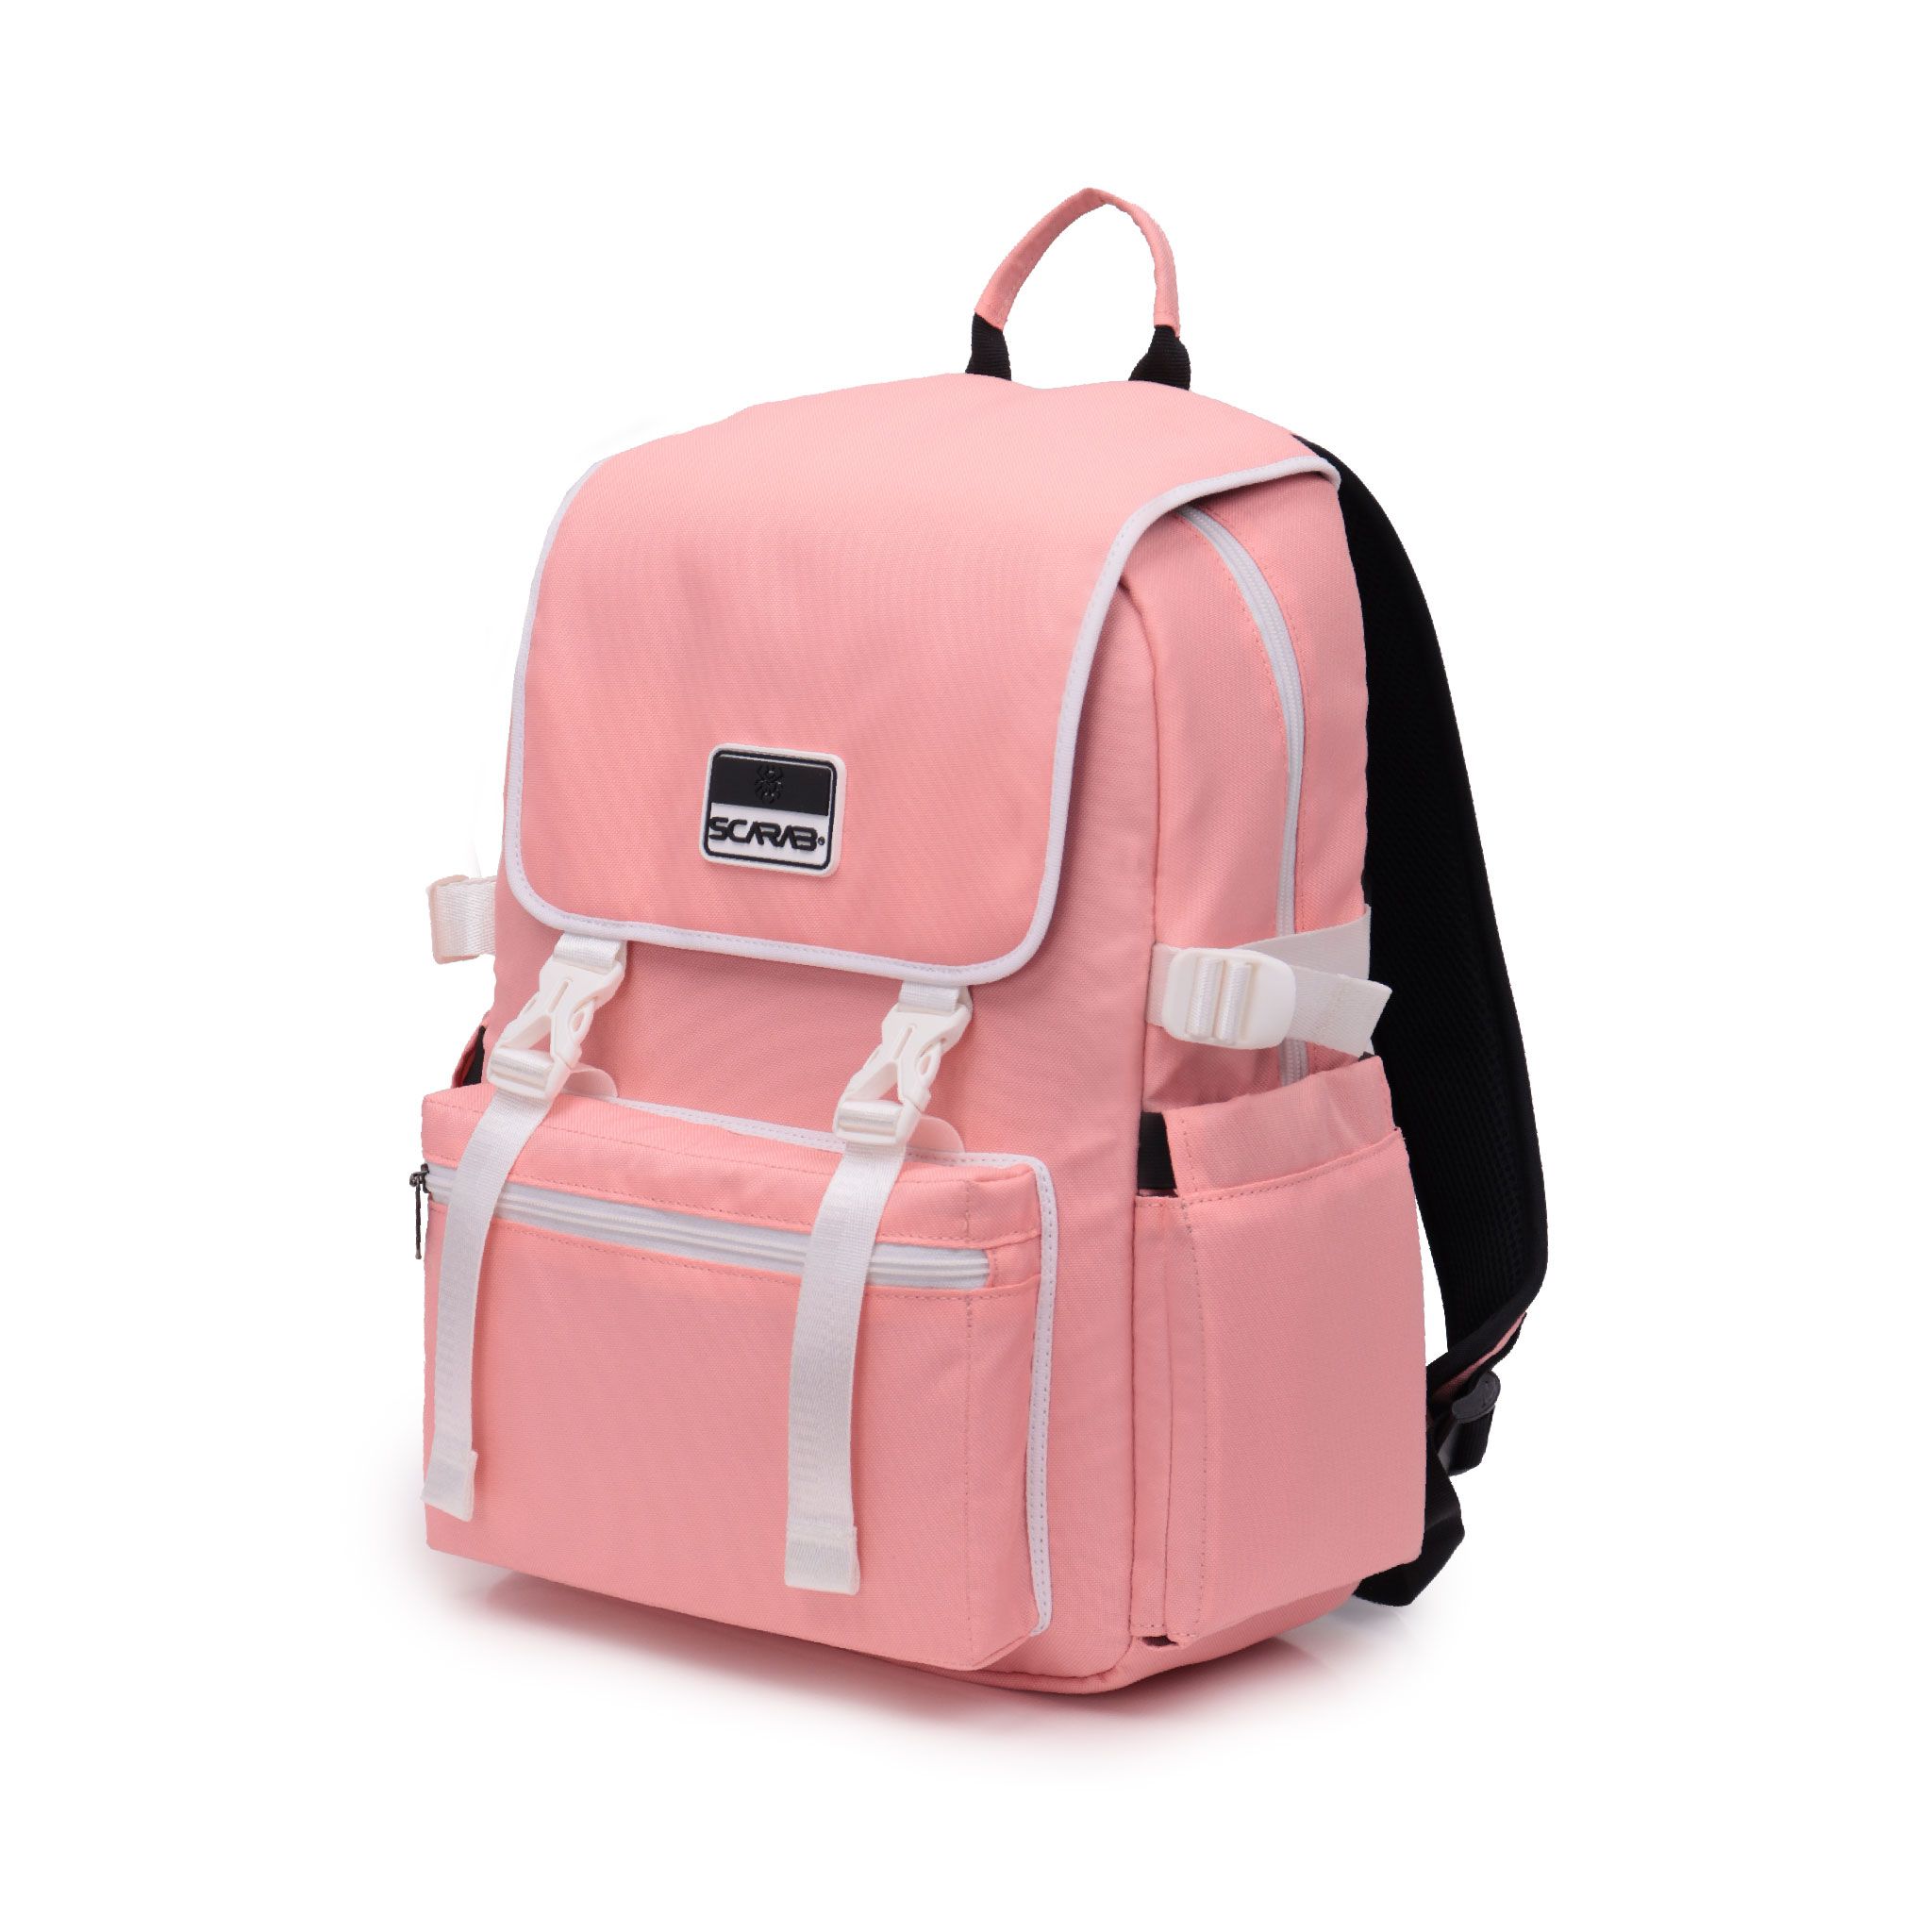  Classmate Backpack - Pink 